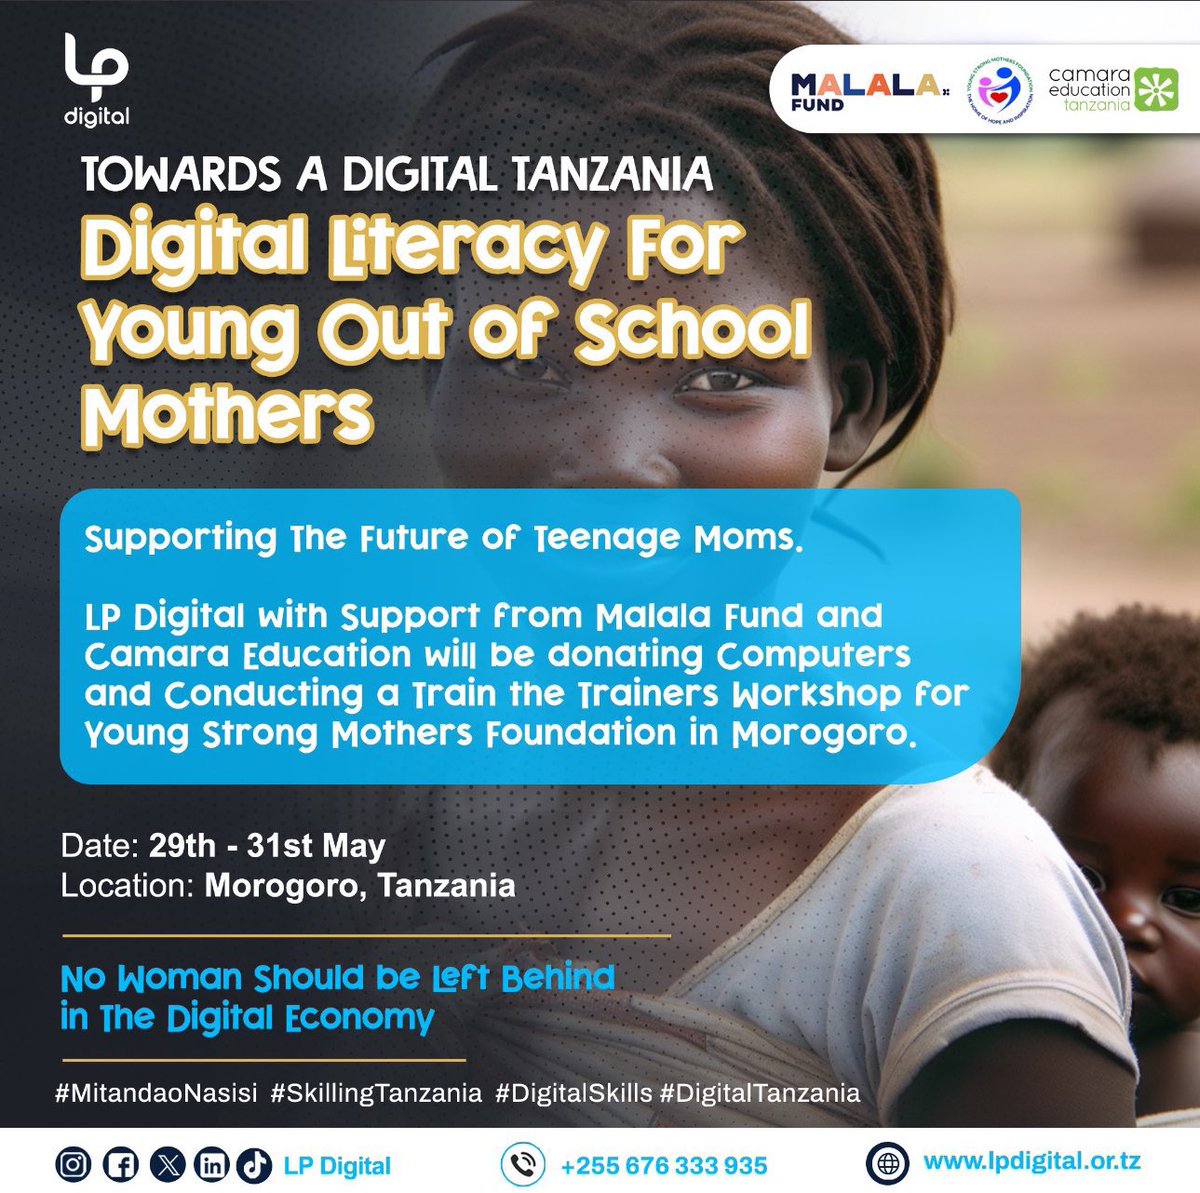 The power of collaboration 💪🏾 Towards a Digital Tanzania✅ Morogoro 📍 See you SOON 🙏🏾 cc @LPDigitalTZ @named_jacquilin @MalalaFund @CamaraEducation